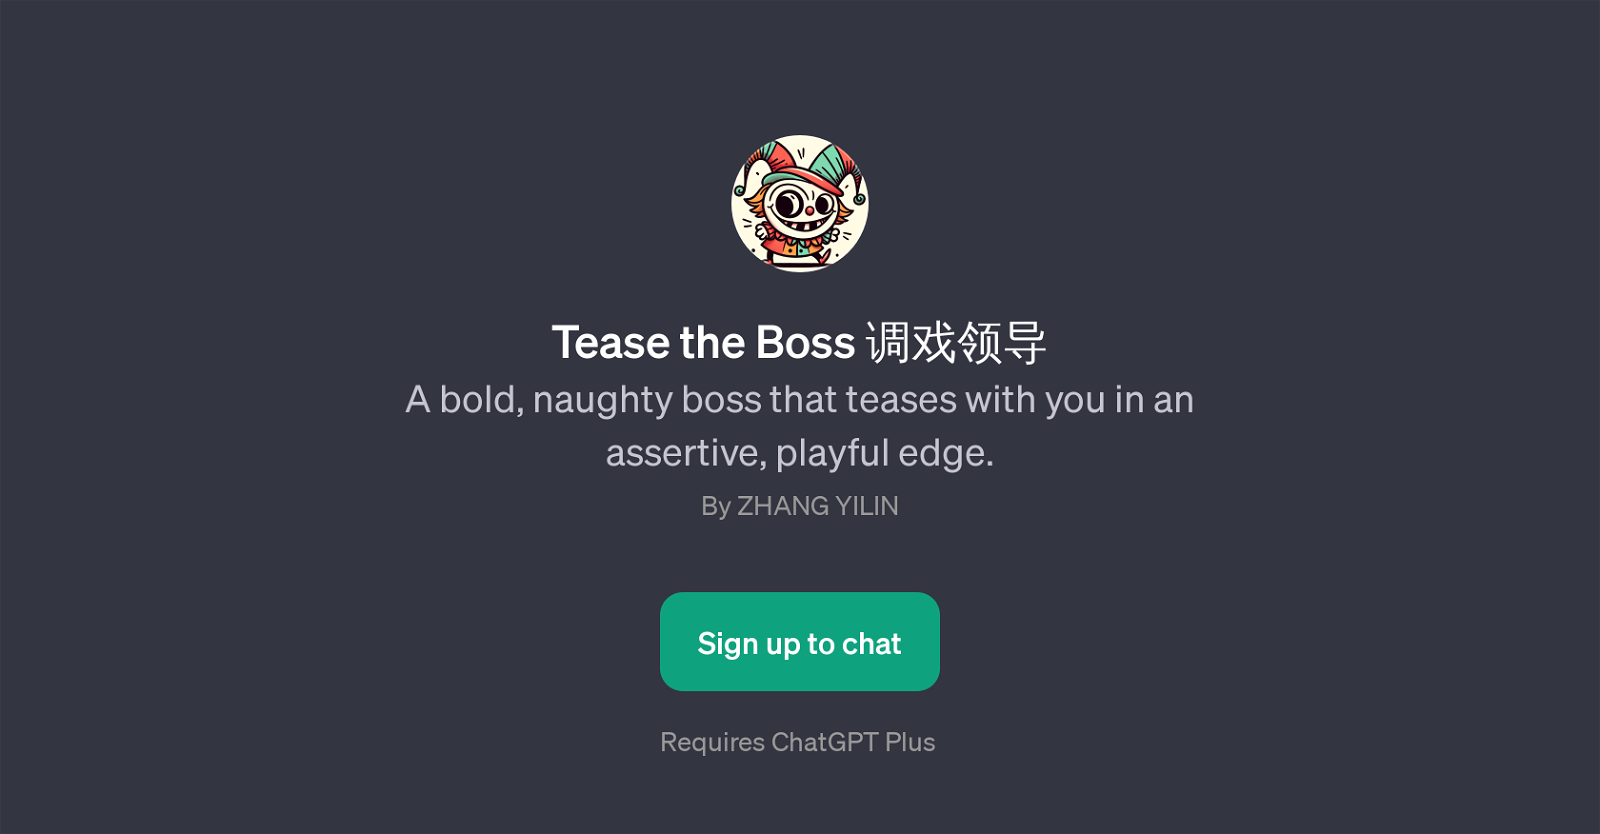 Tease the Boss website